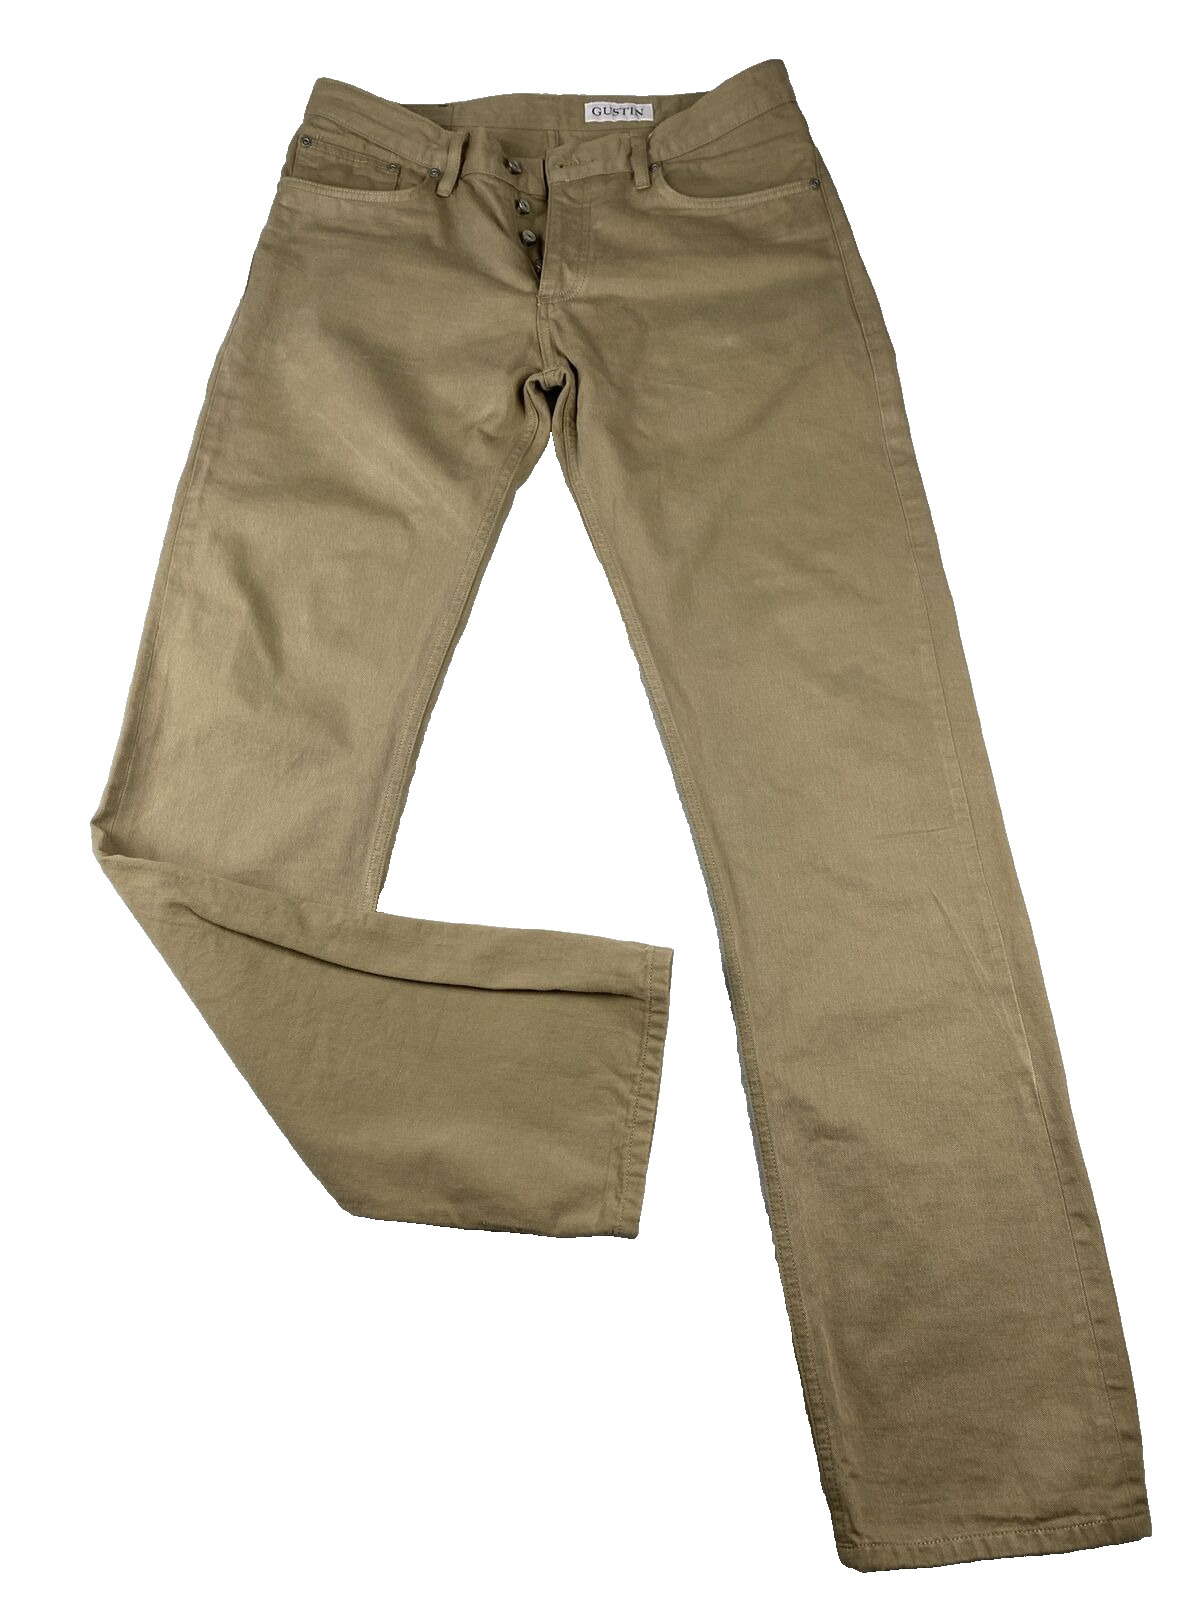 GUSTIN California Straight Button Selvedge Jeans 35x34 Mens  Khaki Denim Pants